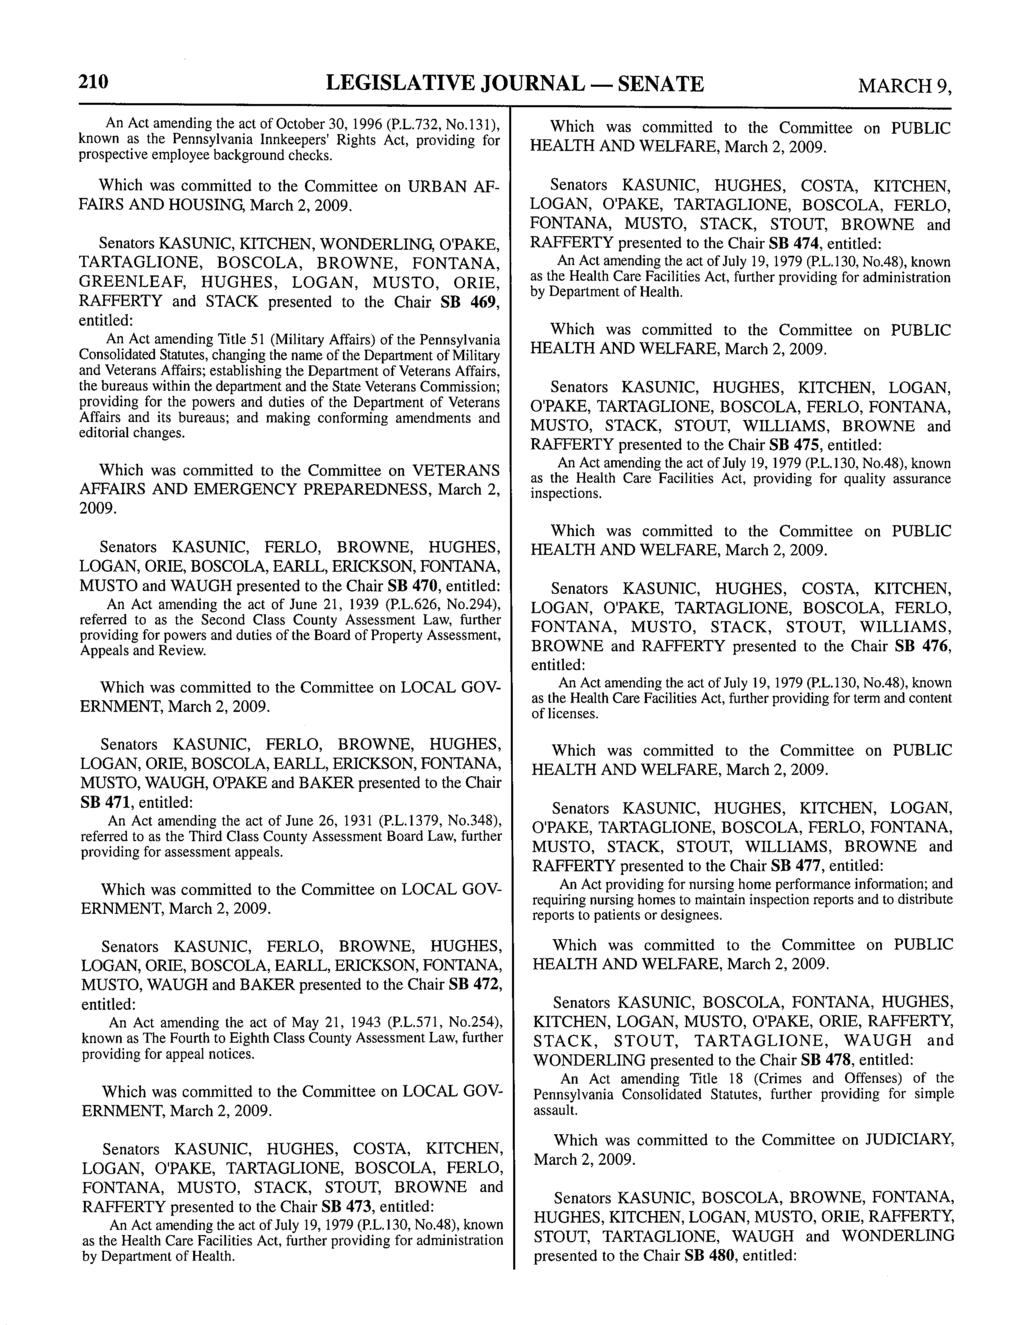 210 LEGISLATIVE JOURNAL - SENATE MARCH 9, An Act amending the act of October 30, 1996 (P.L.732, No.